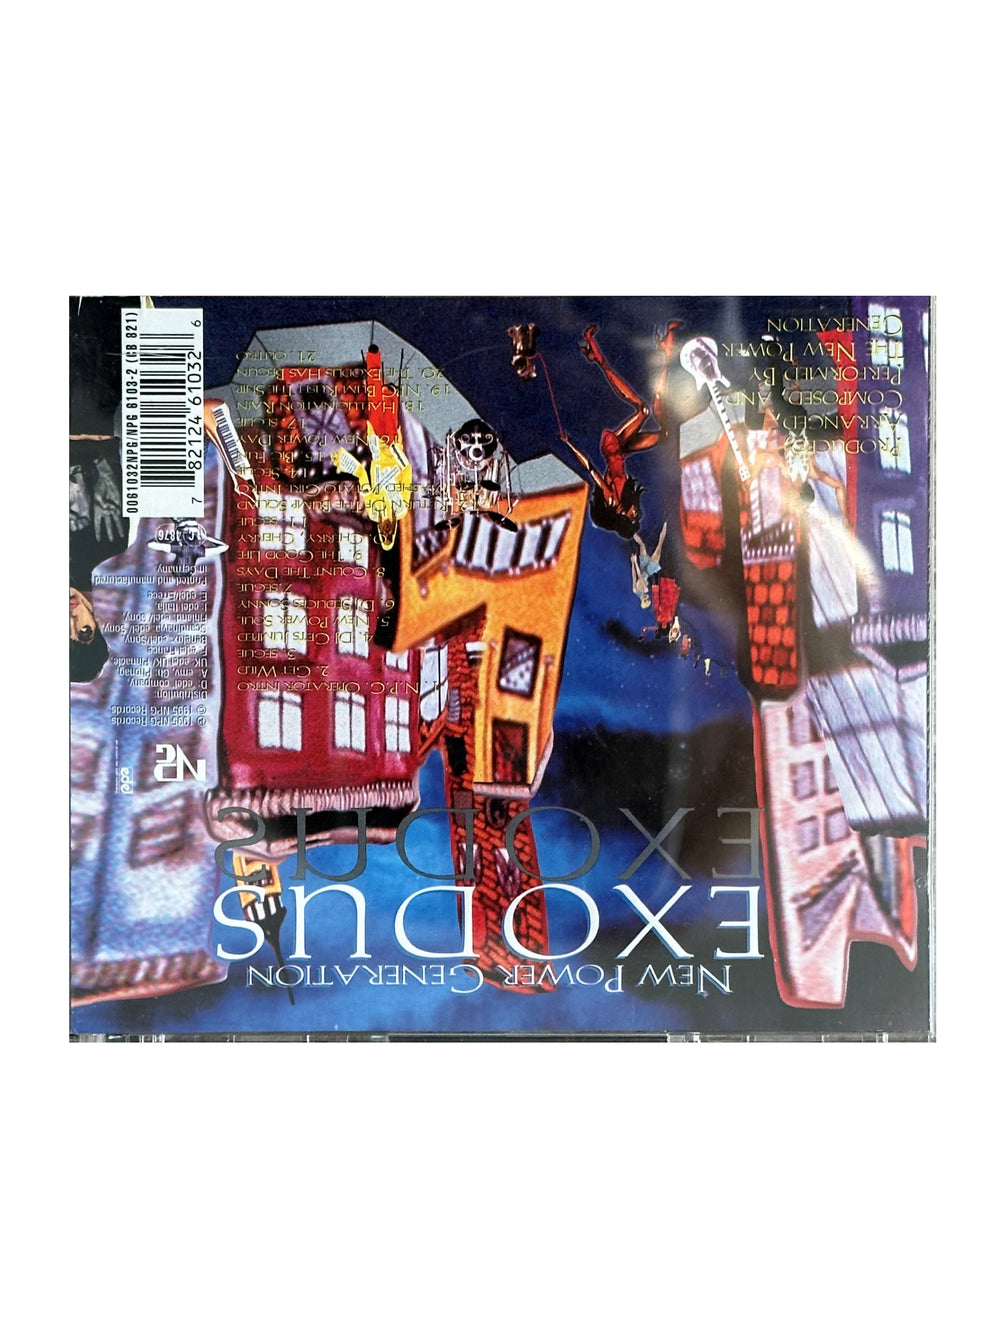 Prince – New Power Generation - Exodus CD Album EU Preloved: 1995